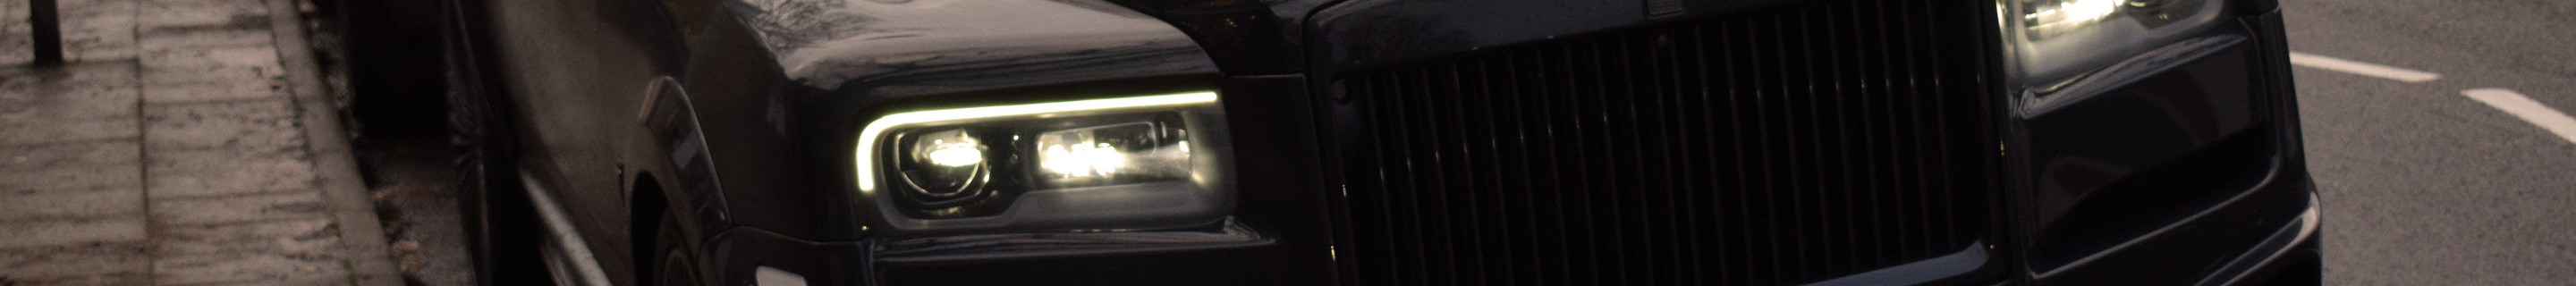 Rolls-Royce Revere Cullinan Black Badge